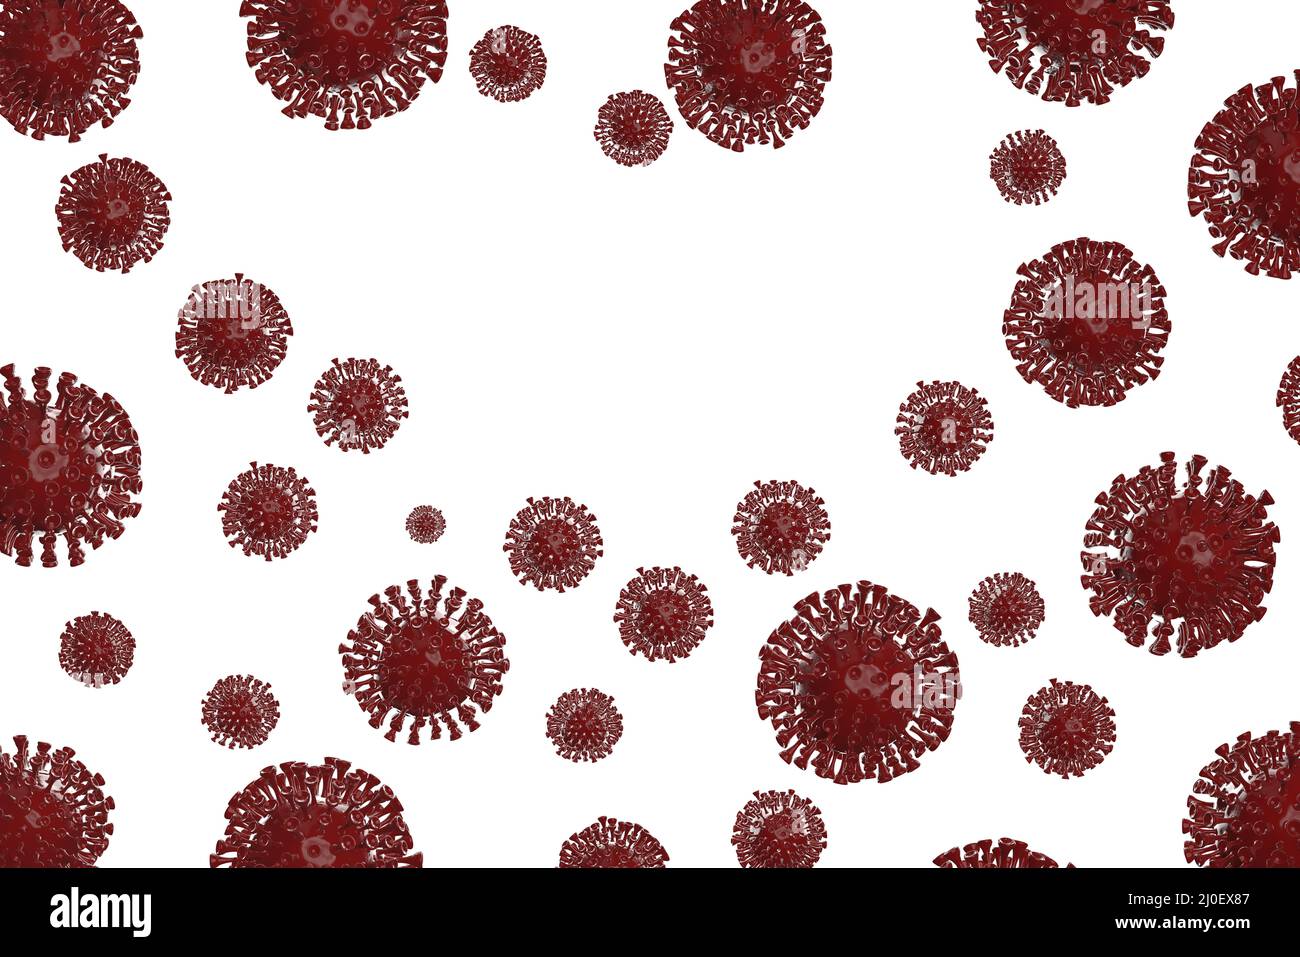 Coronavirus Wuhan, China COVID-19 background with corona cells around. Epidemic condition 3d illustration on white background wi Stock Photo